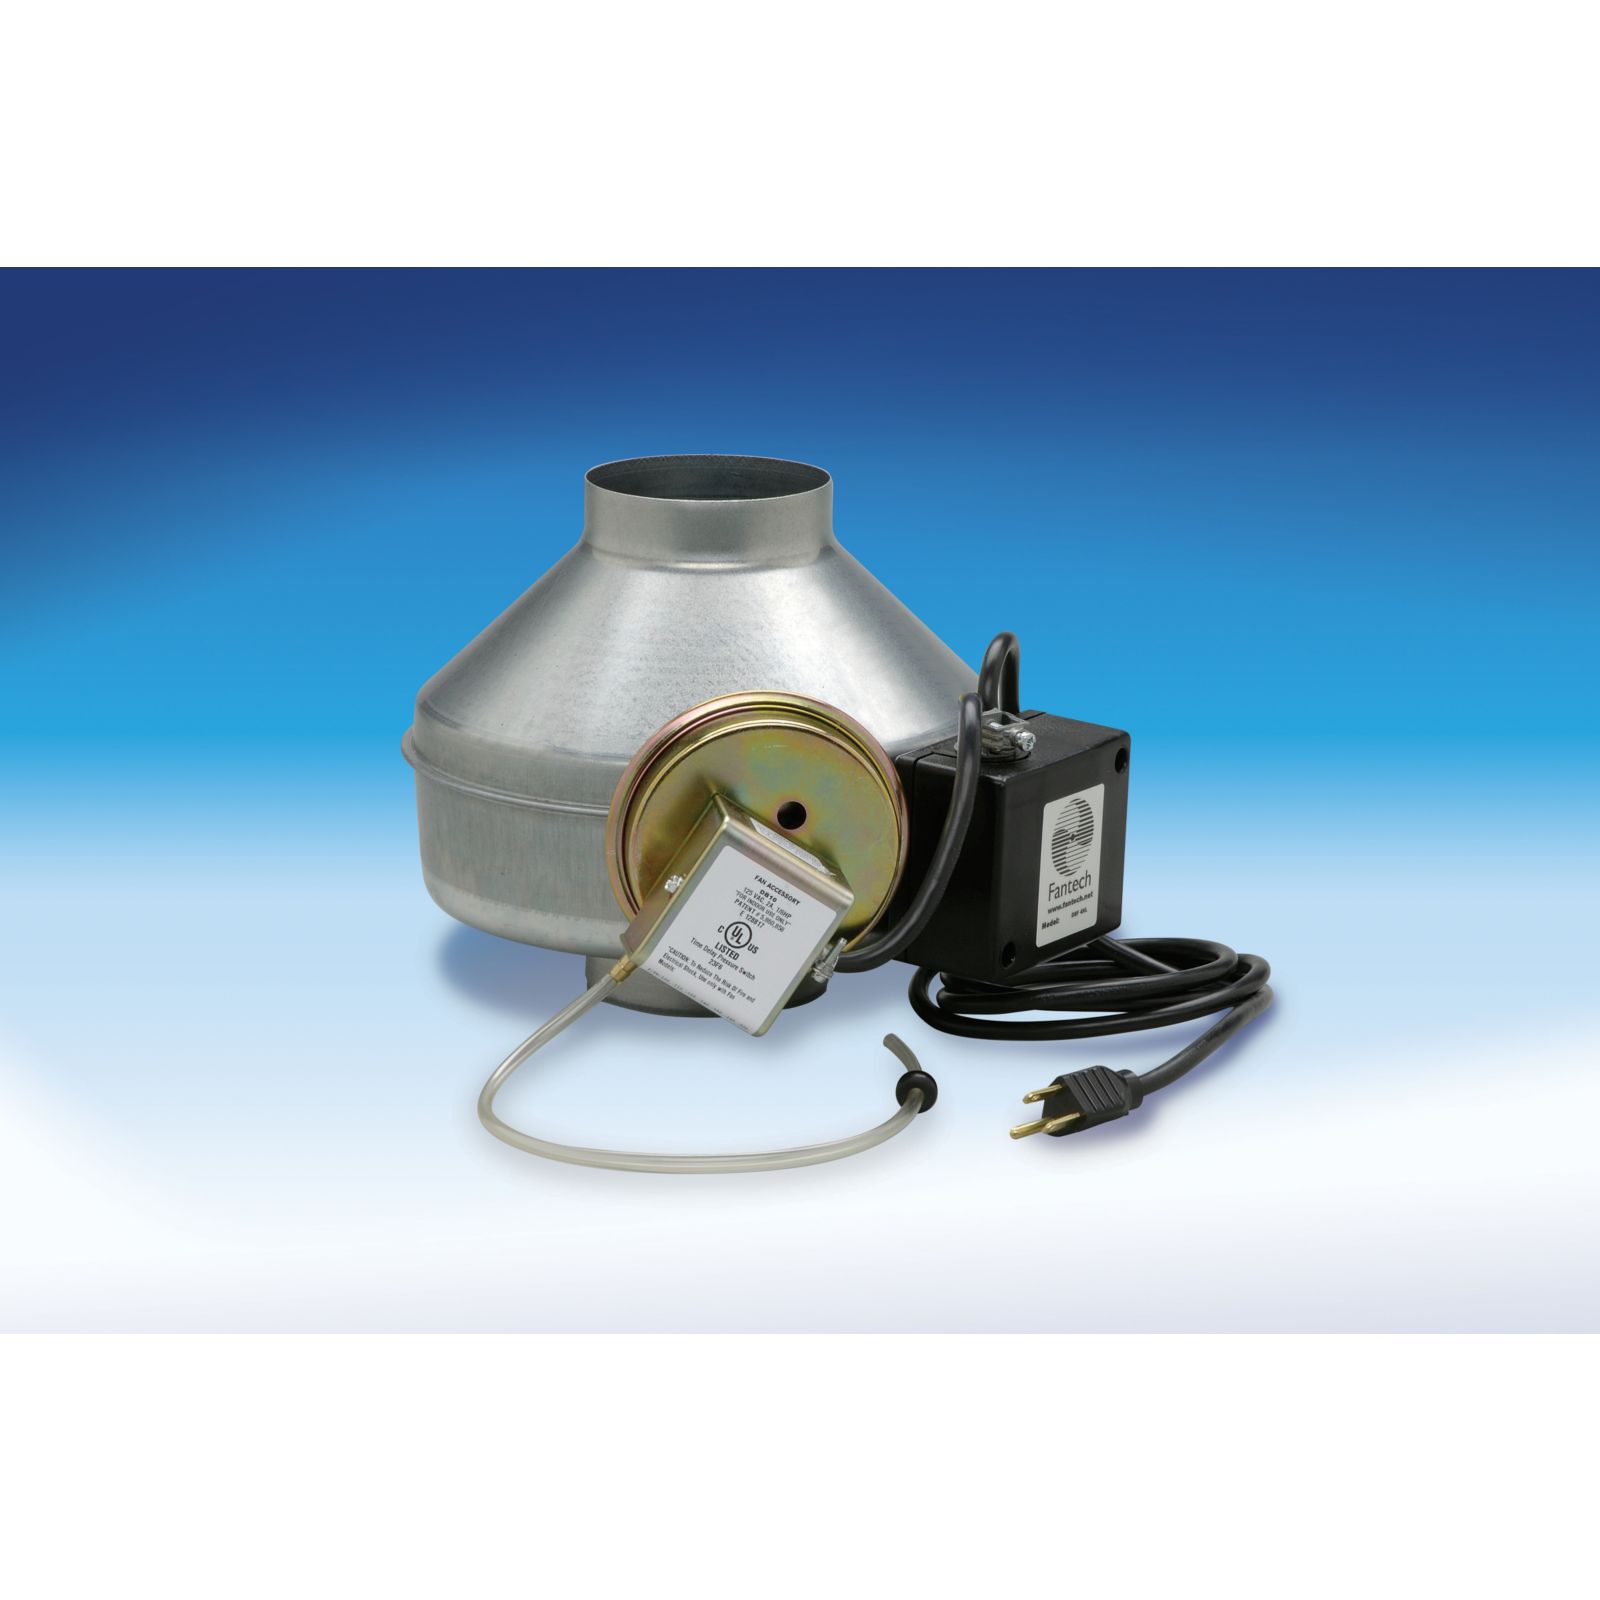 Fantech 40095 - Dryer Booster Kit W/ FG 4XL Fan